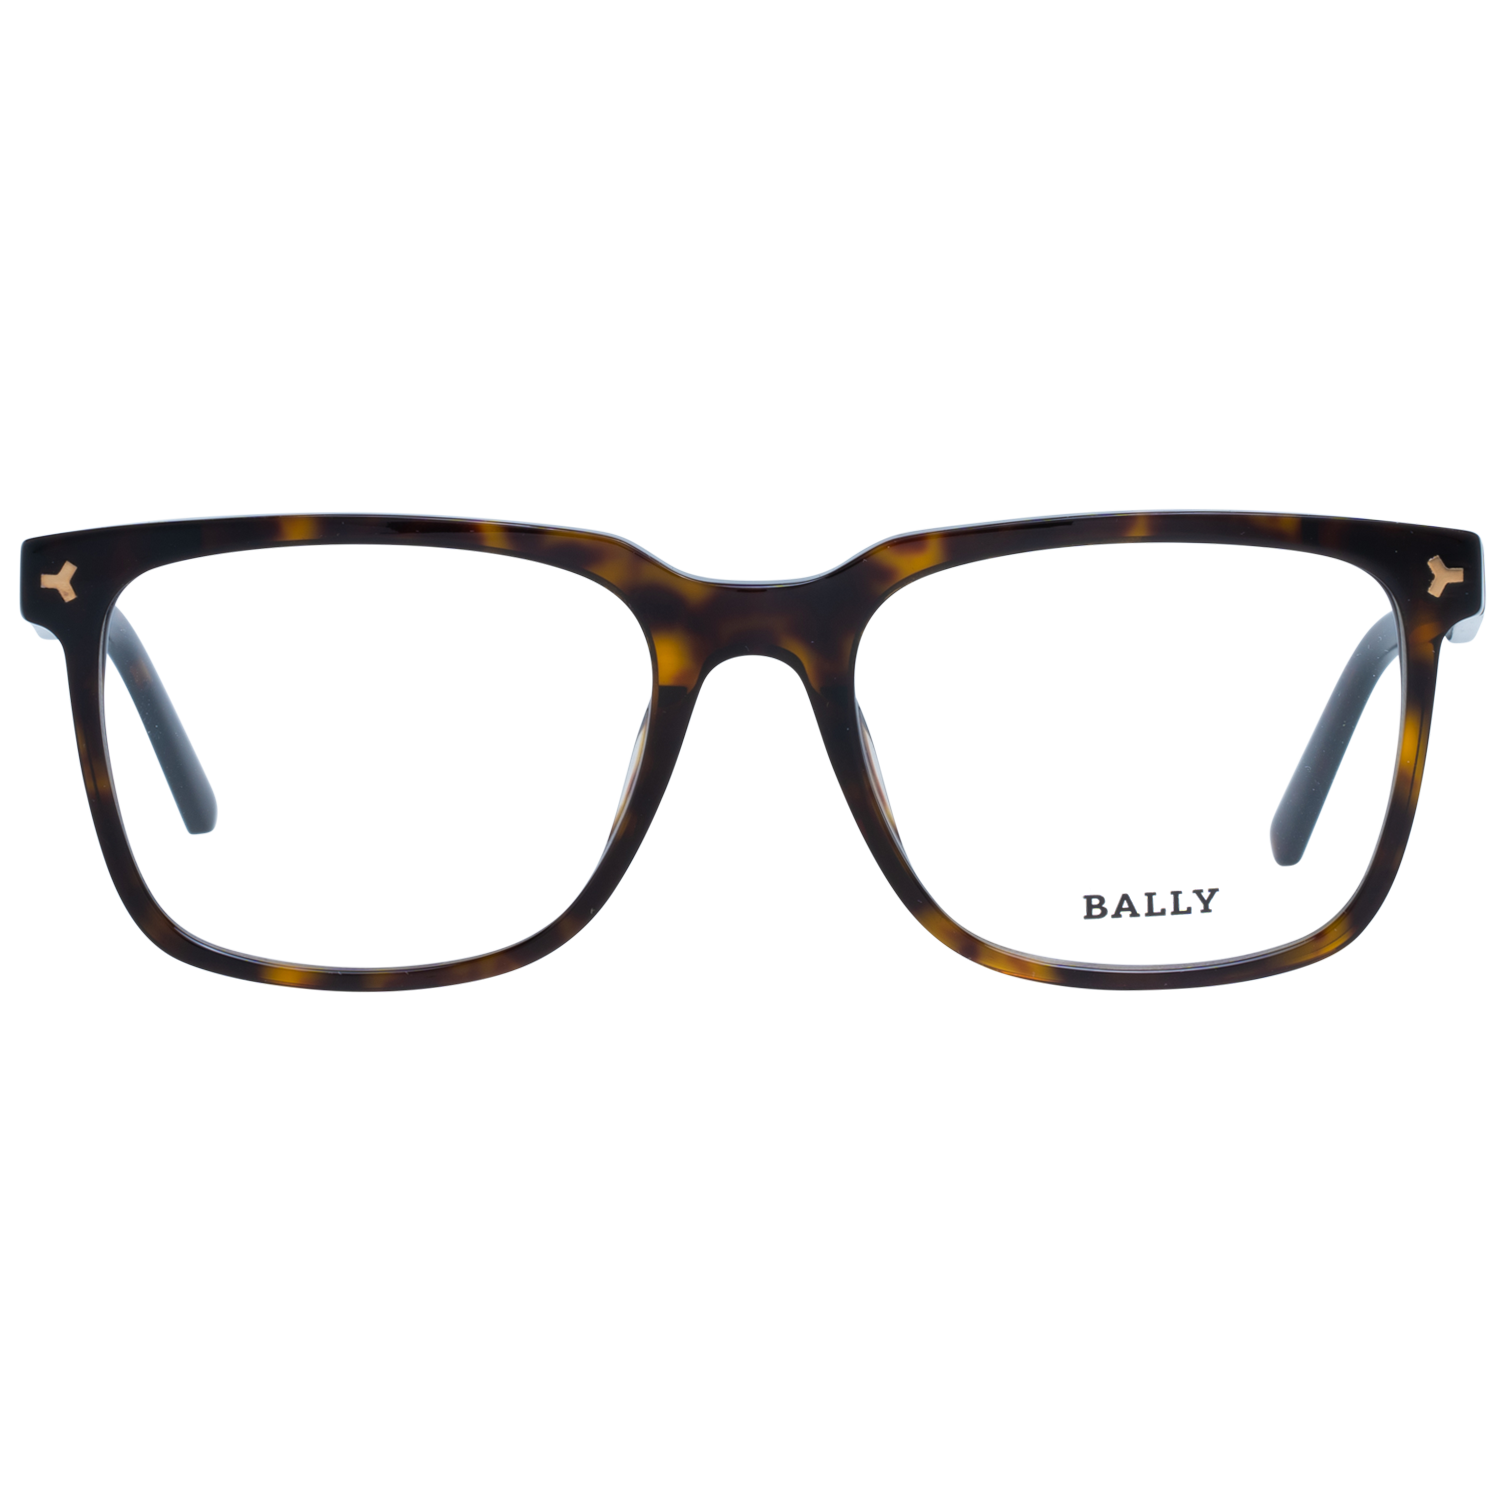 Bally Optical Frame Bally Eyeglasses Frames BY5044 052 53 Eyeglasses Eyewear UK USA Australia 